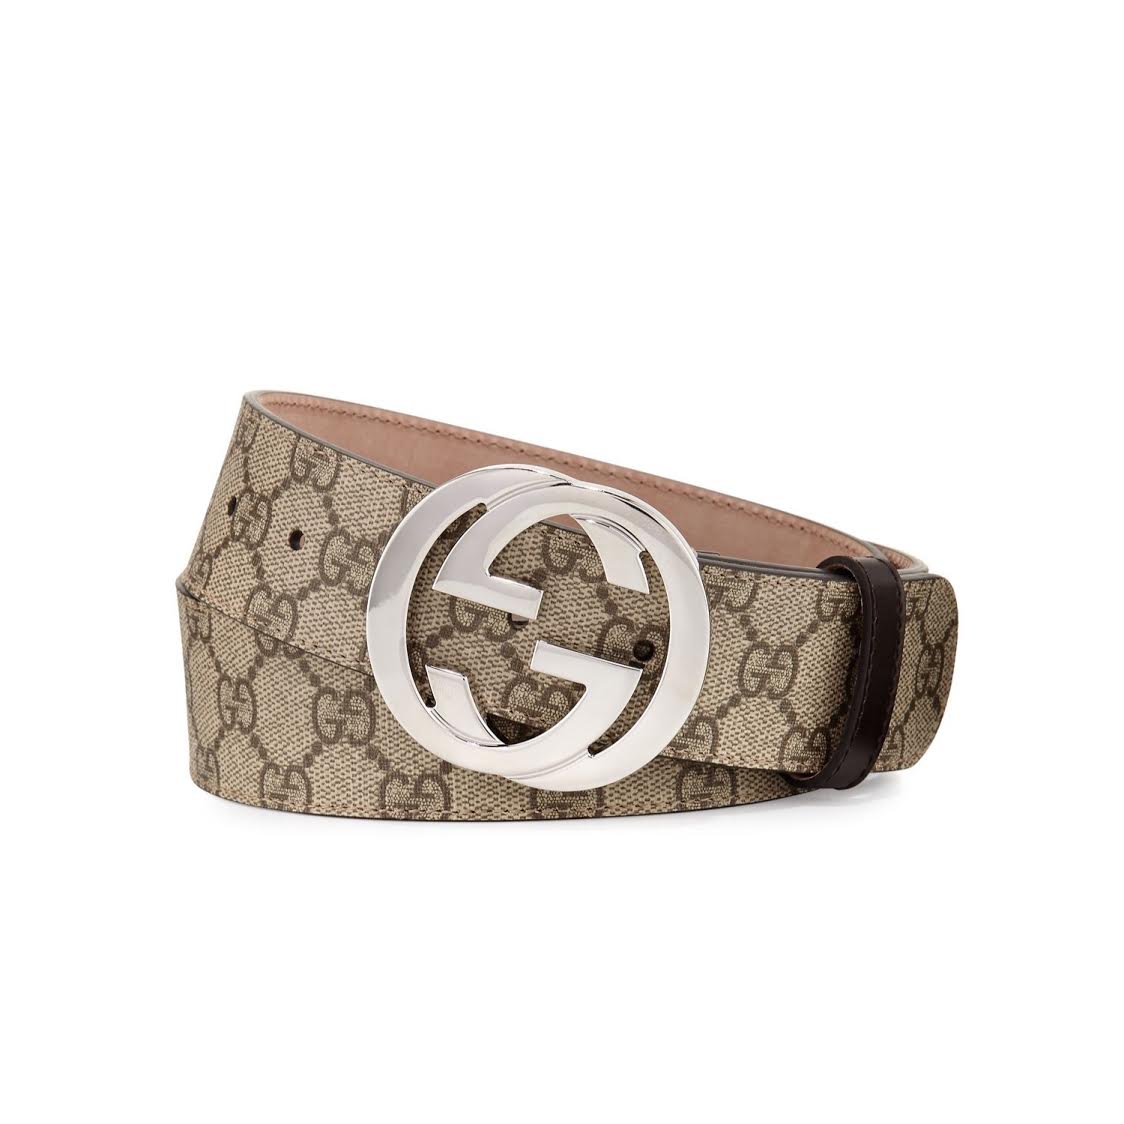 Gucci GG Supreme Belt w/ Interlocking G - Size 38